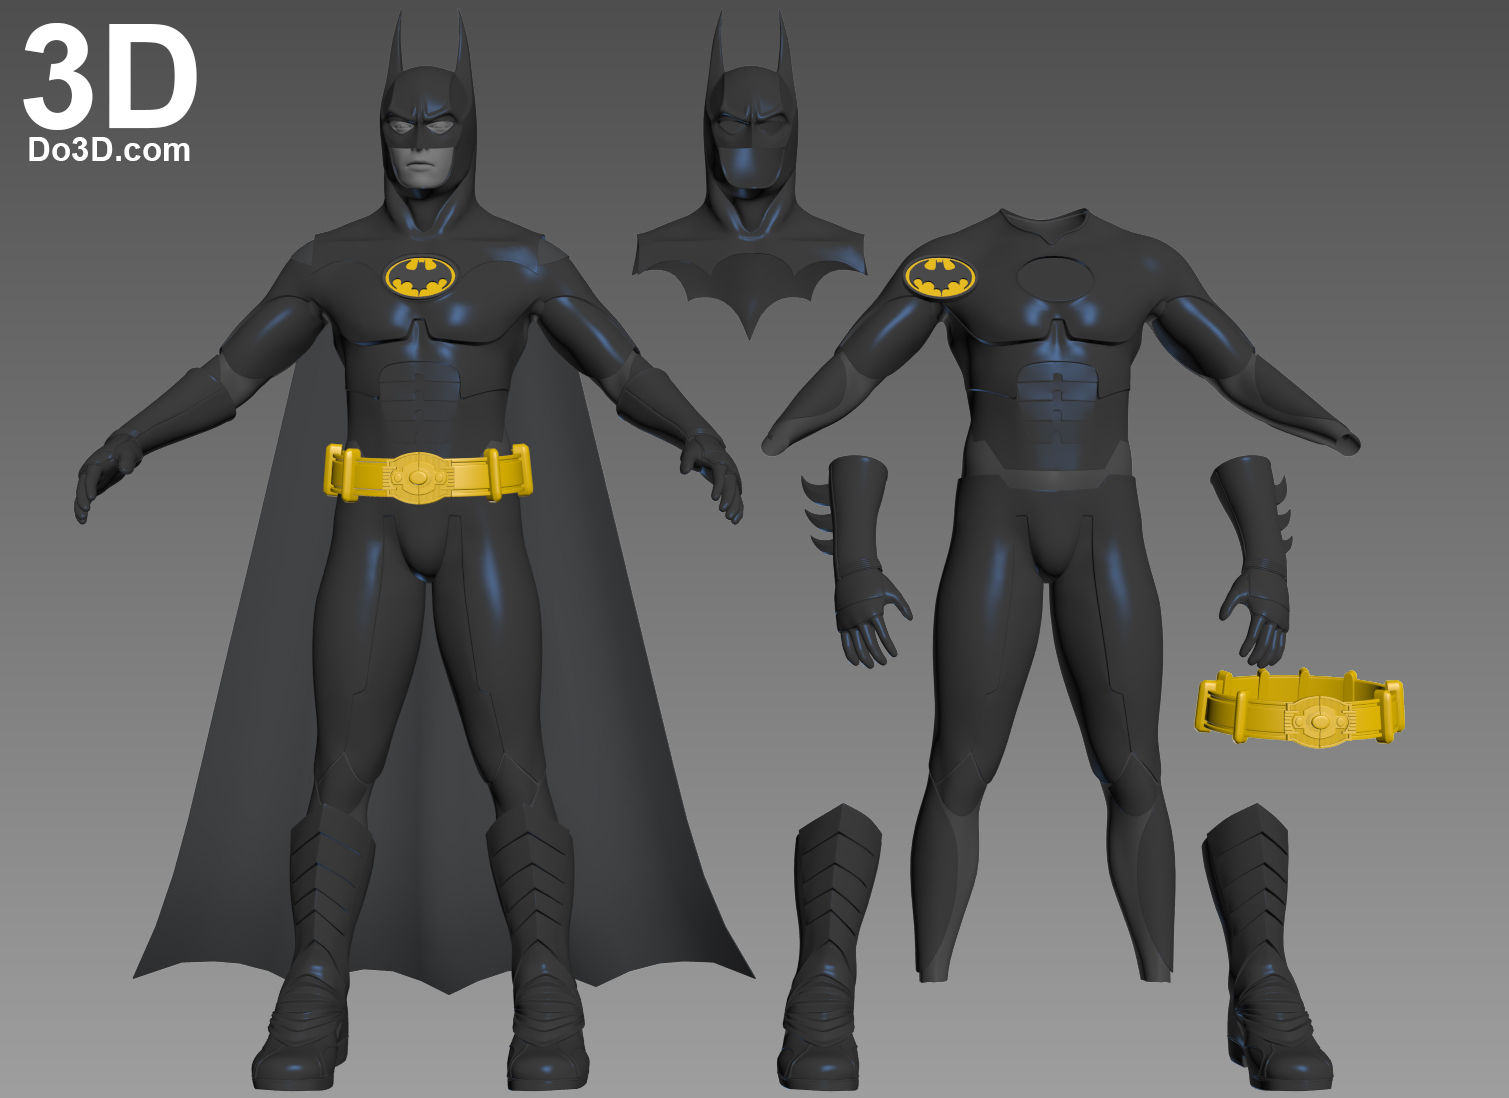 3D Printable Model: Full Body Batman Returns Batsuit Armor, Helmet,  Gauntlet, Belt, Boots and more | Print File Formats: STL – Do3D Portfolio